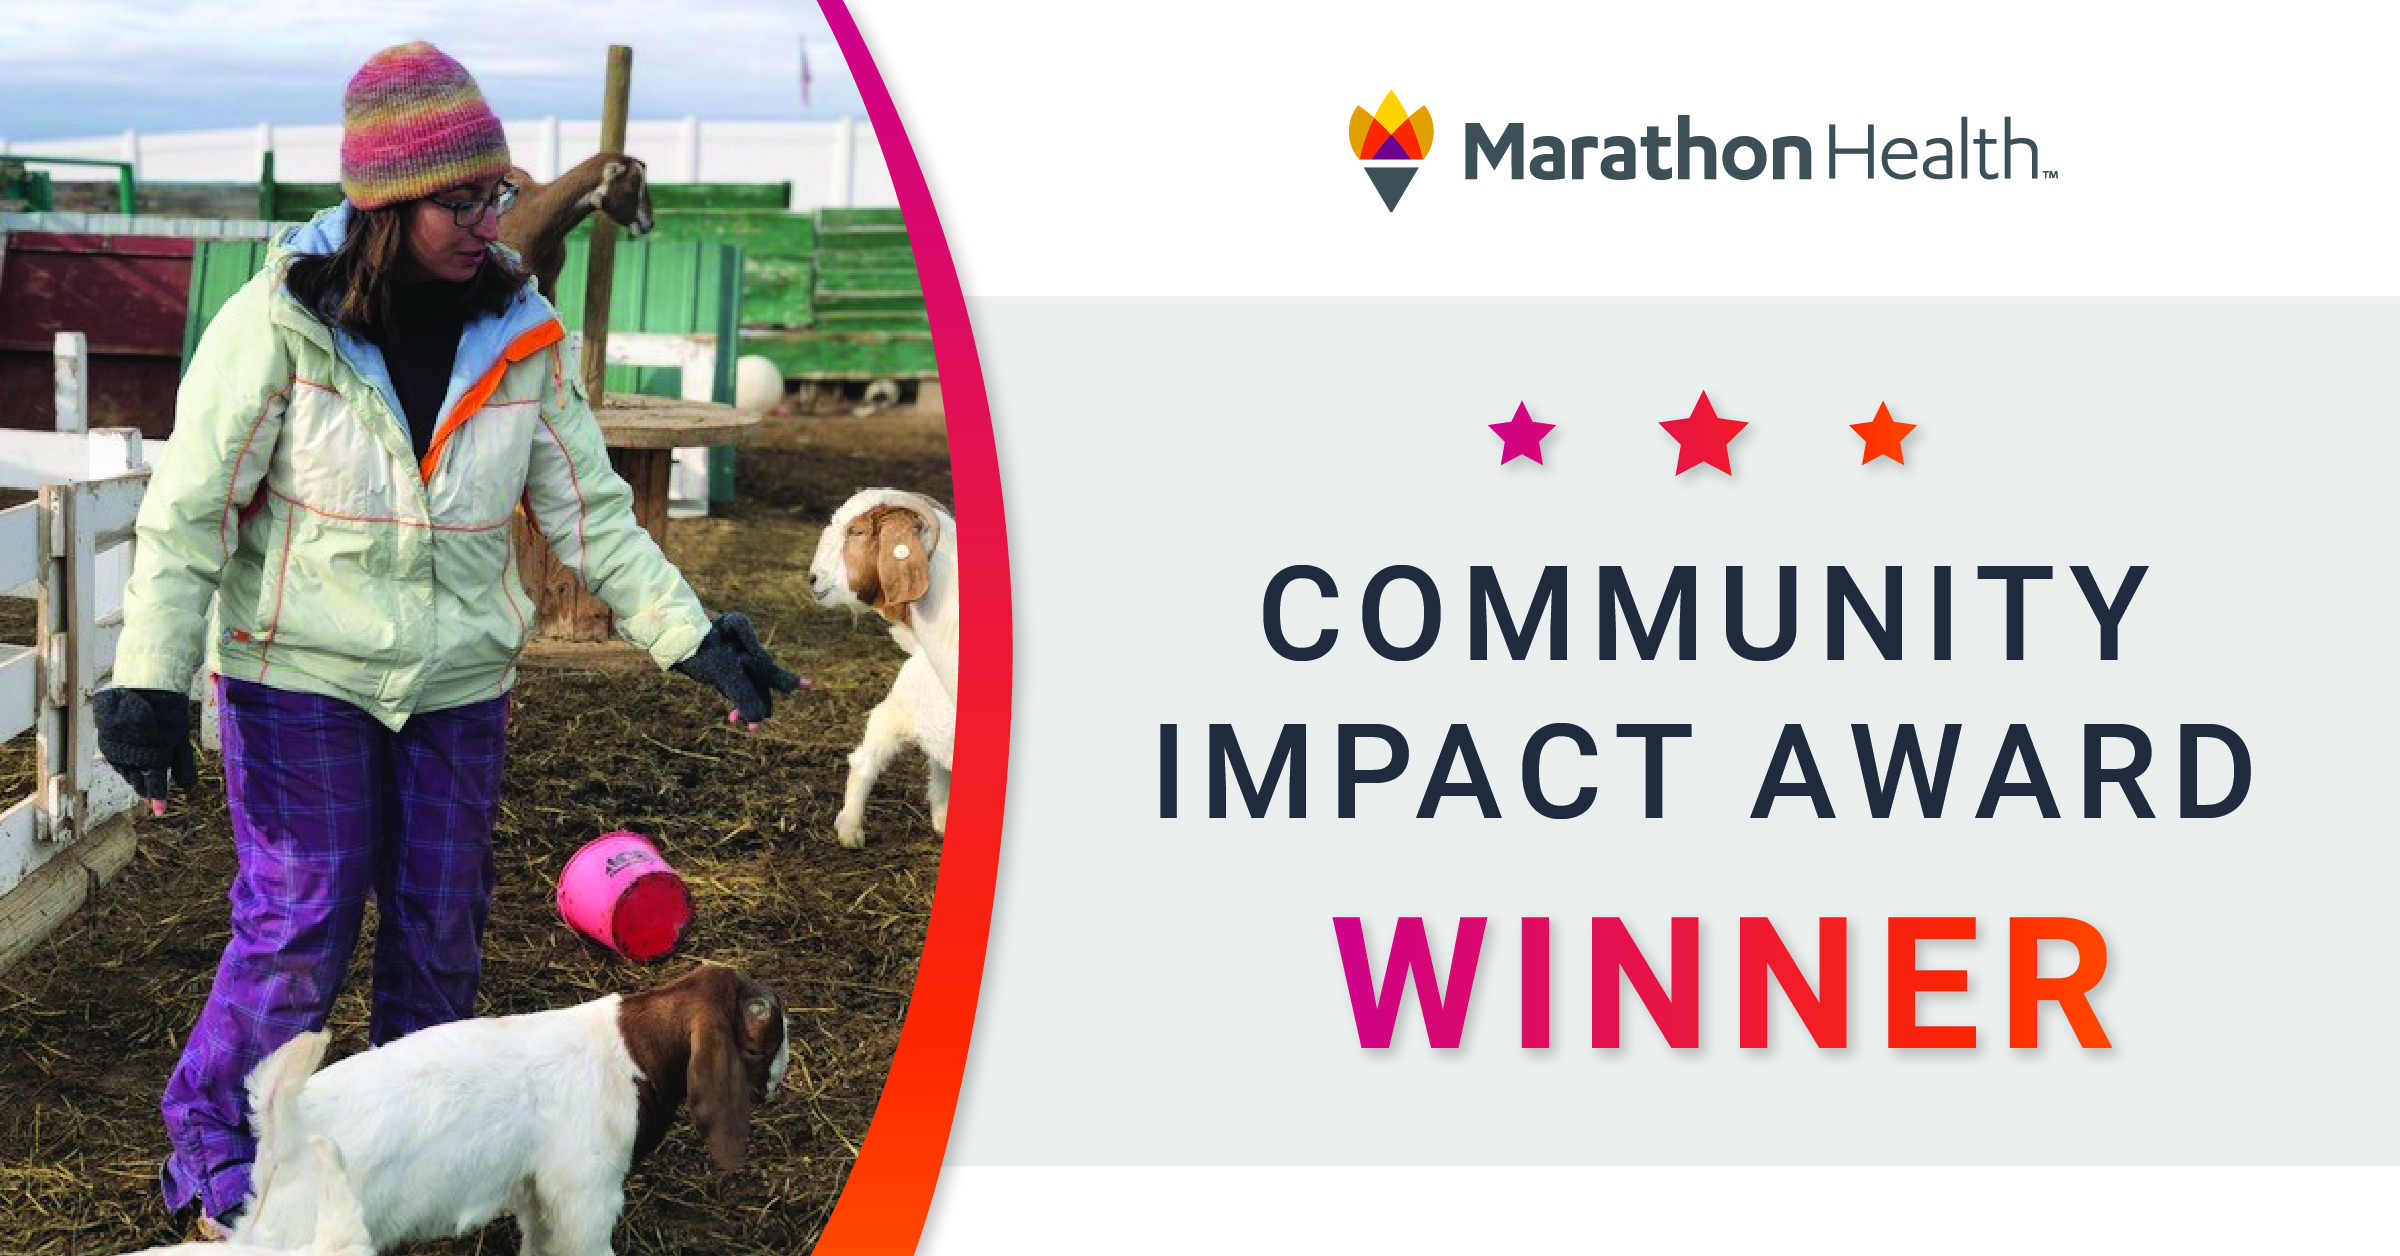 Marathon Health's Community Impact Award Winner